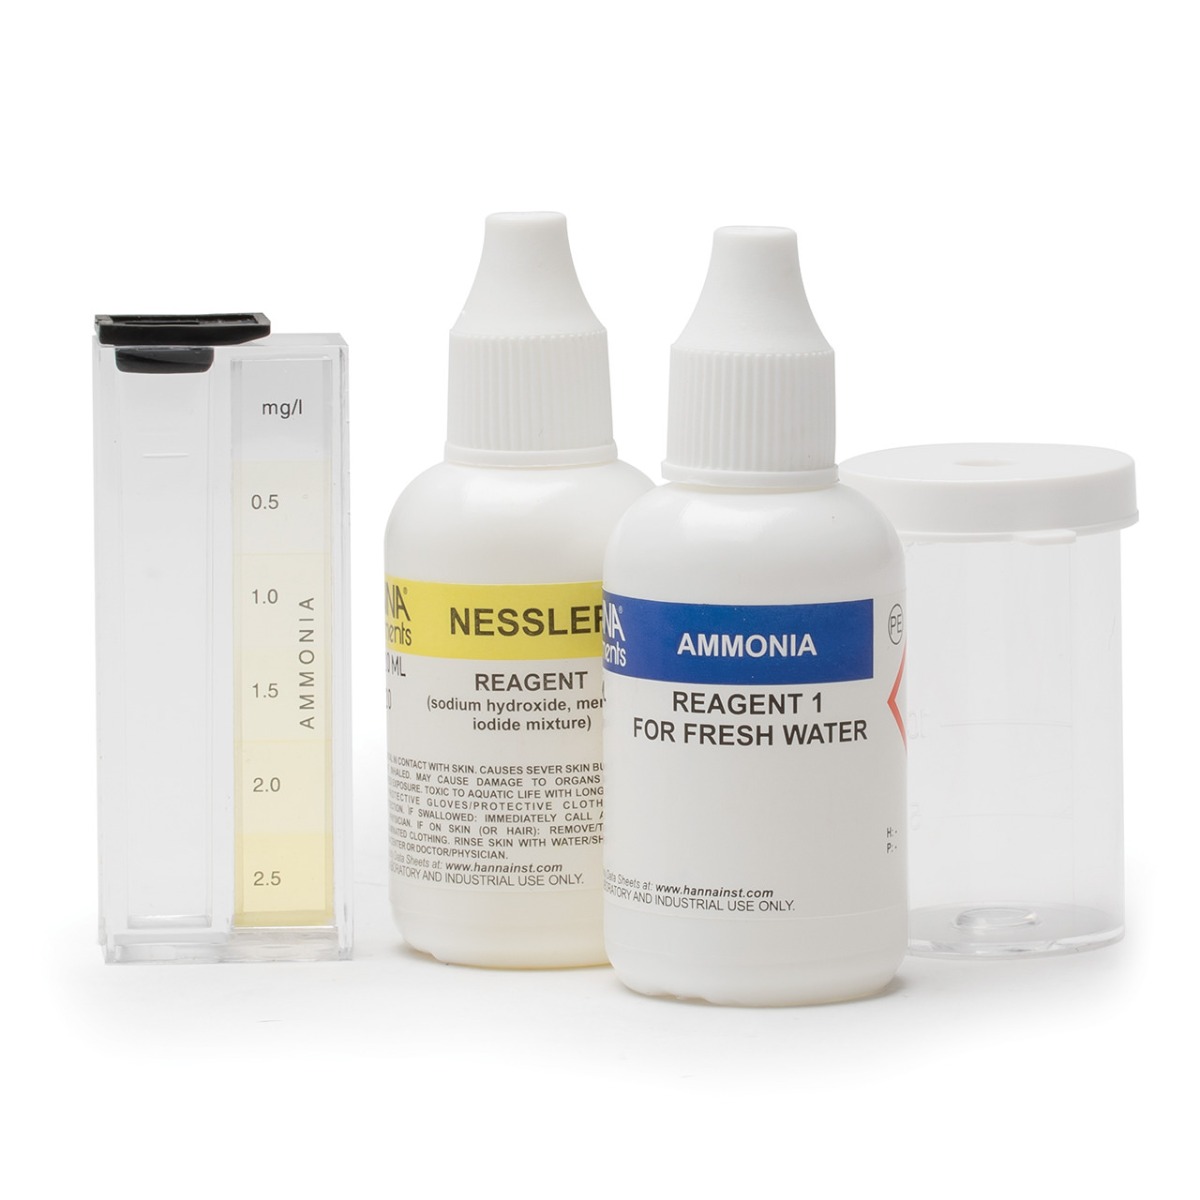 HI3824 Ammonia Test Kit for Fresh Water